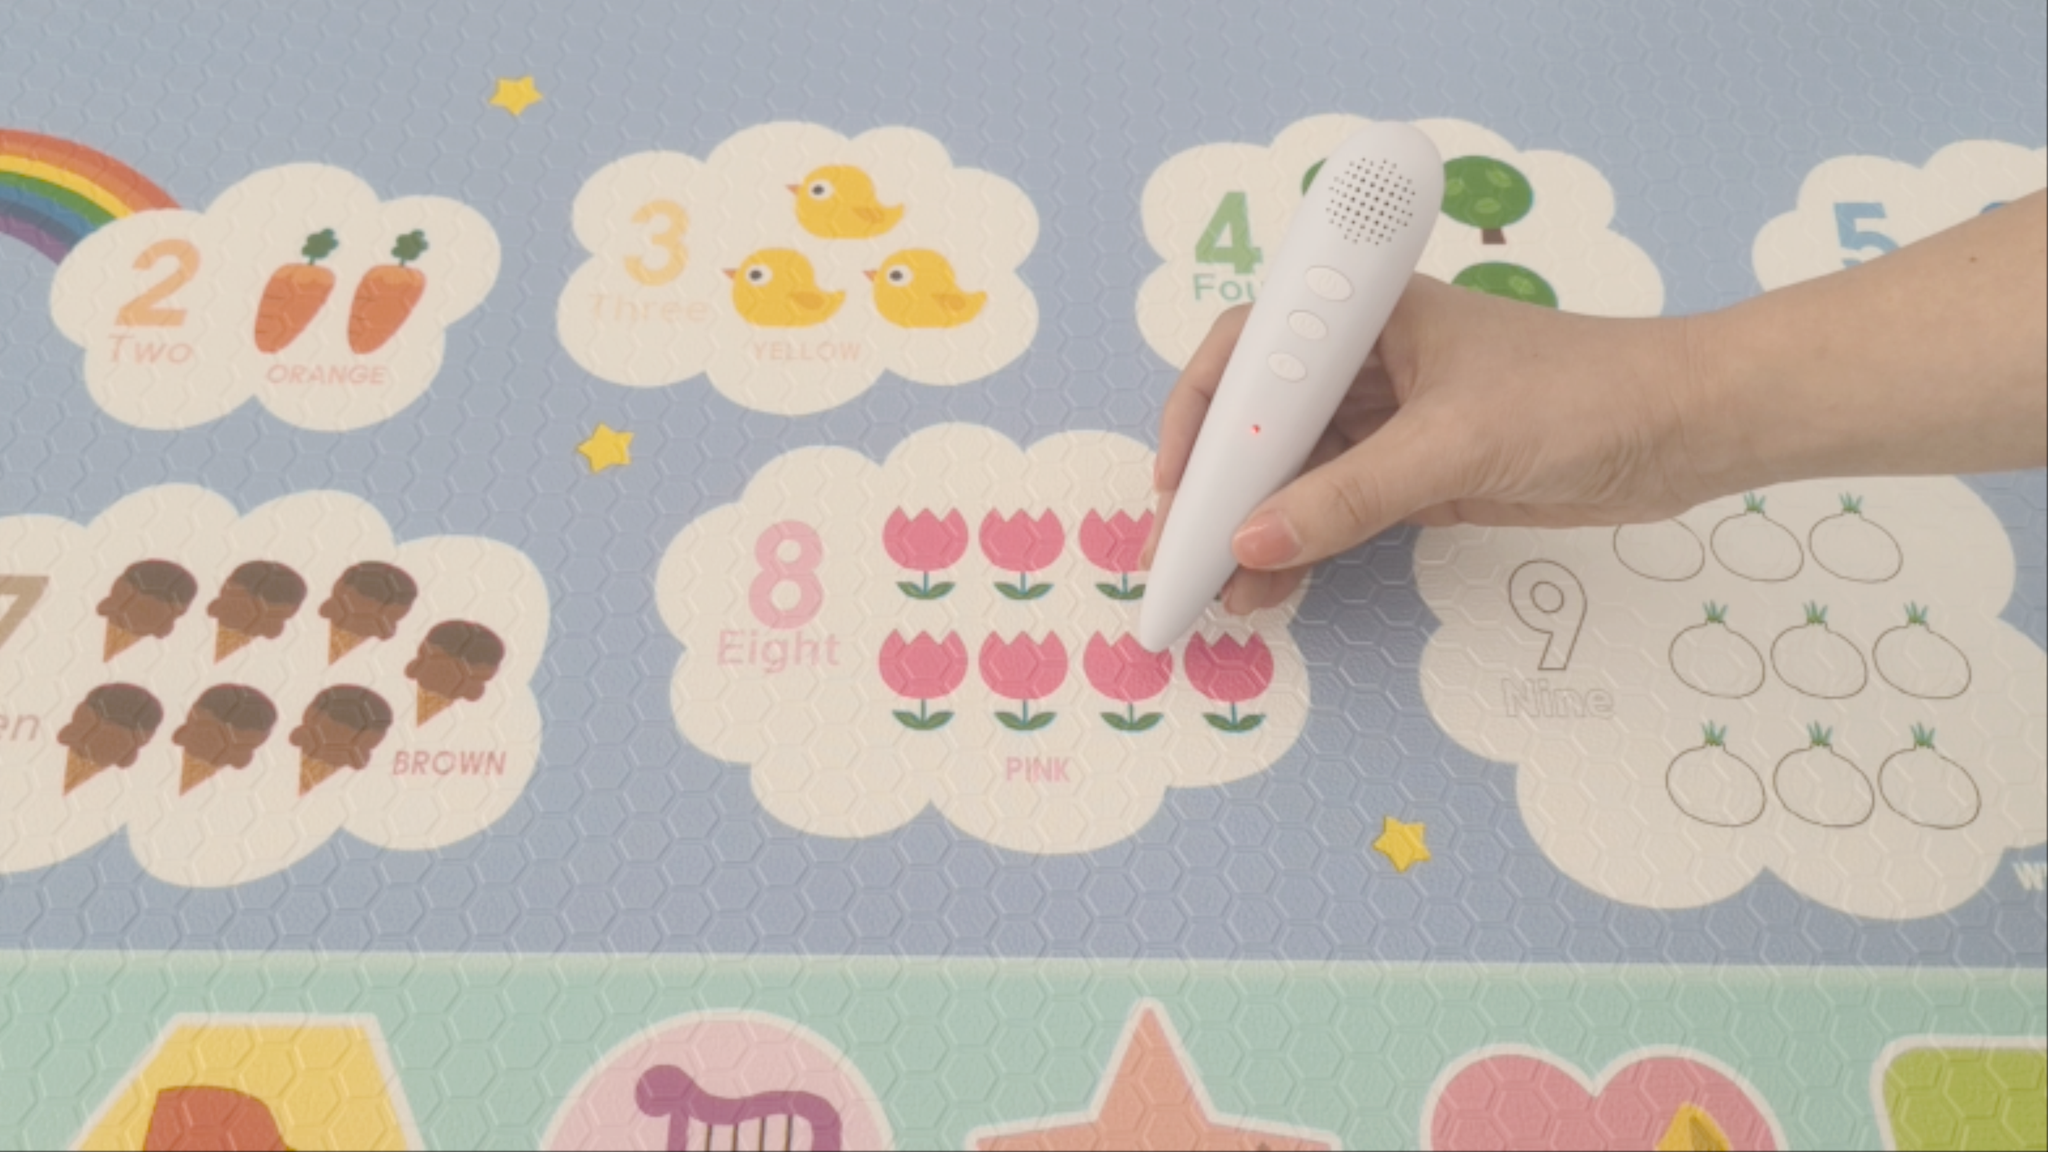 BABYCARE Sensory Playmat - Talking Pen